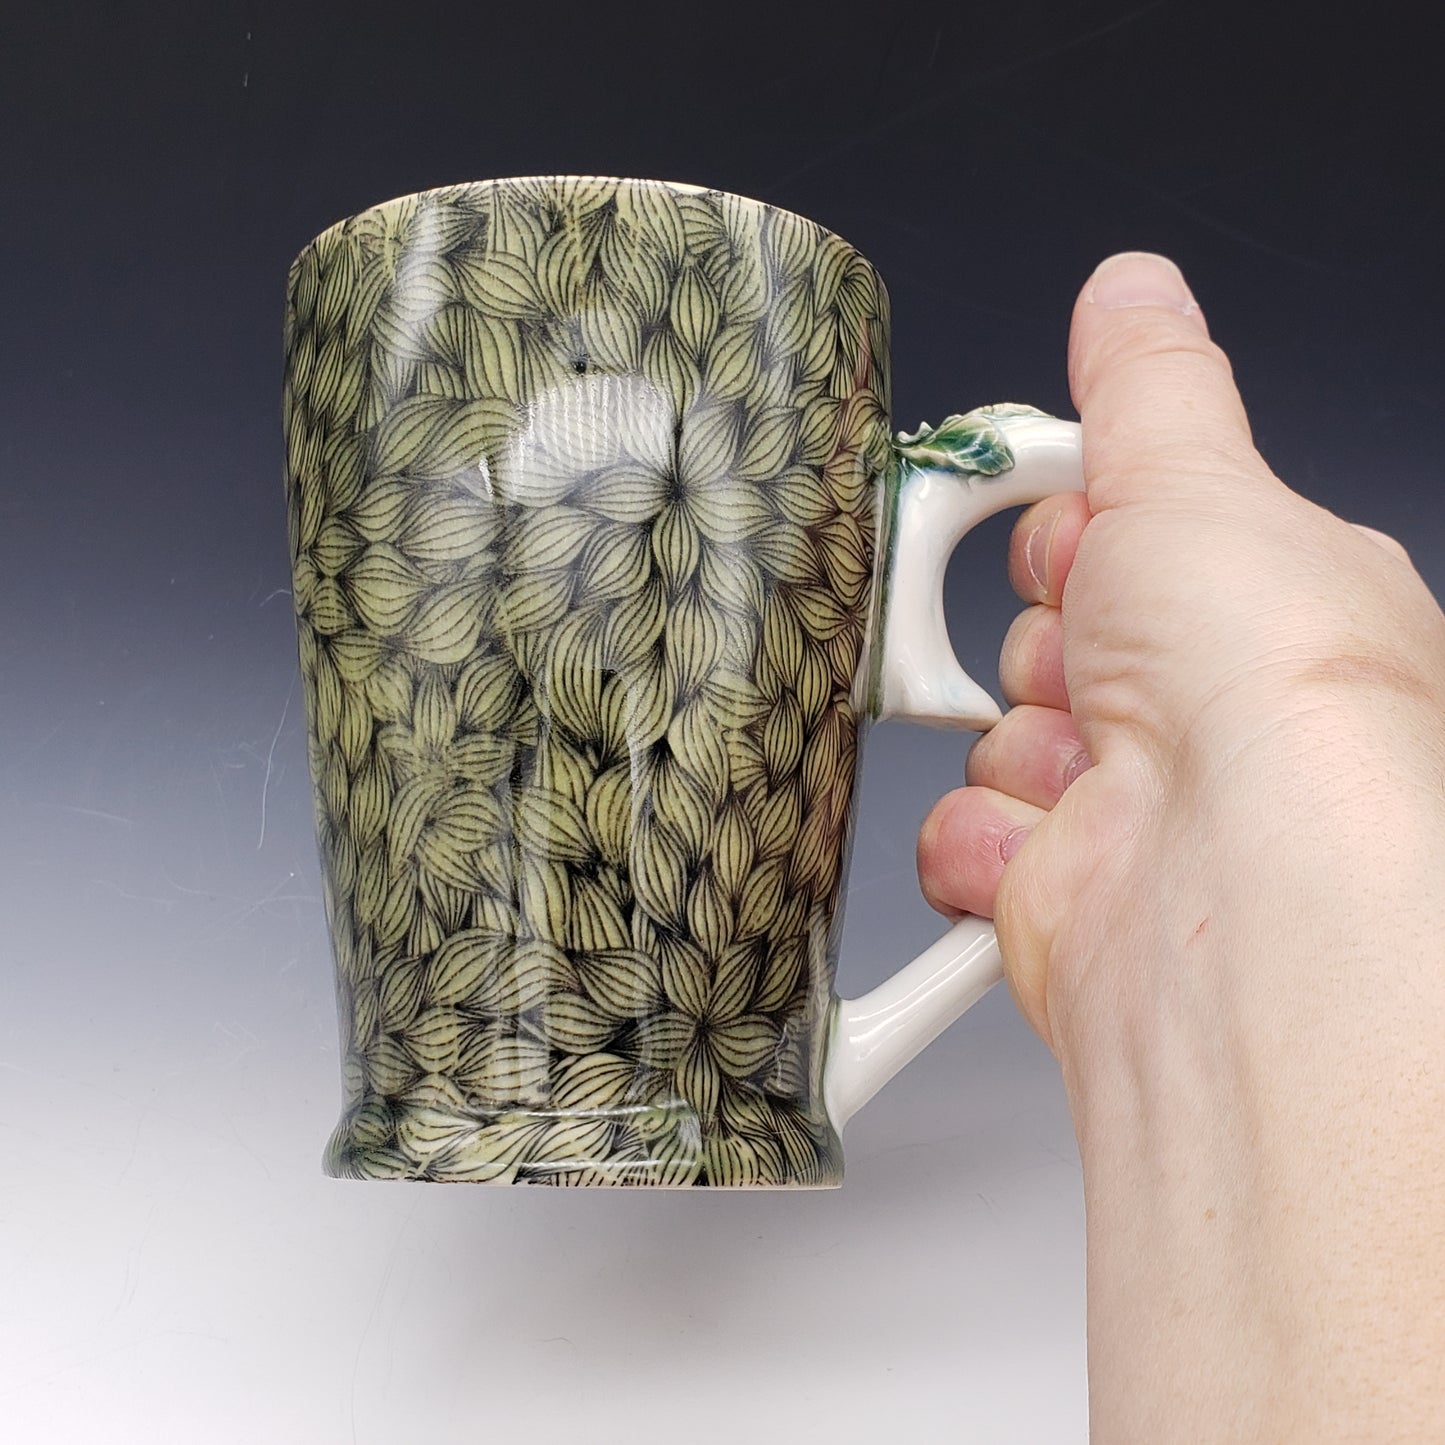 Green leaf mug